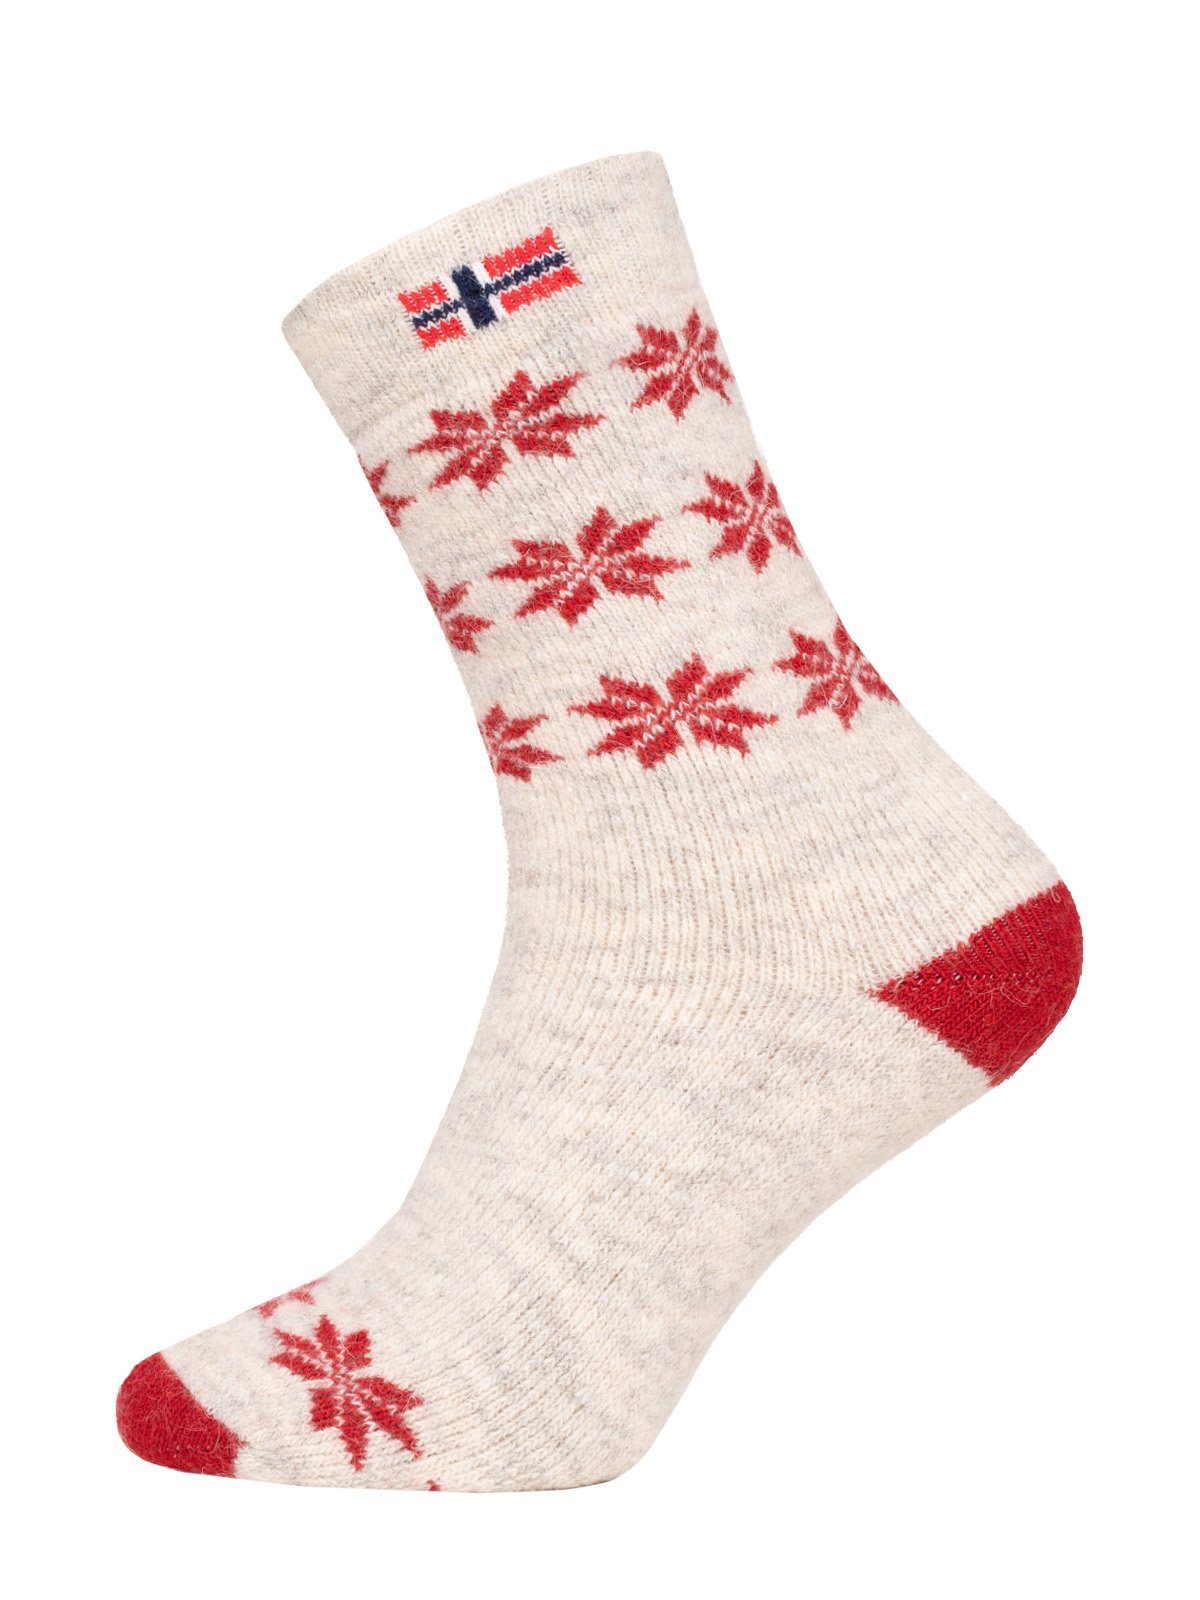 Wollanteil Warm 80% Norwegen" Kuschelsocken Skandinavische Nordic Norwegischem "Snowflake Dicke Hoher HomeOfSocks Socken Socken Design Hyggelig Wollsocke Rot